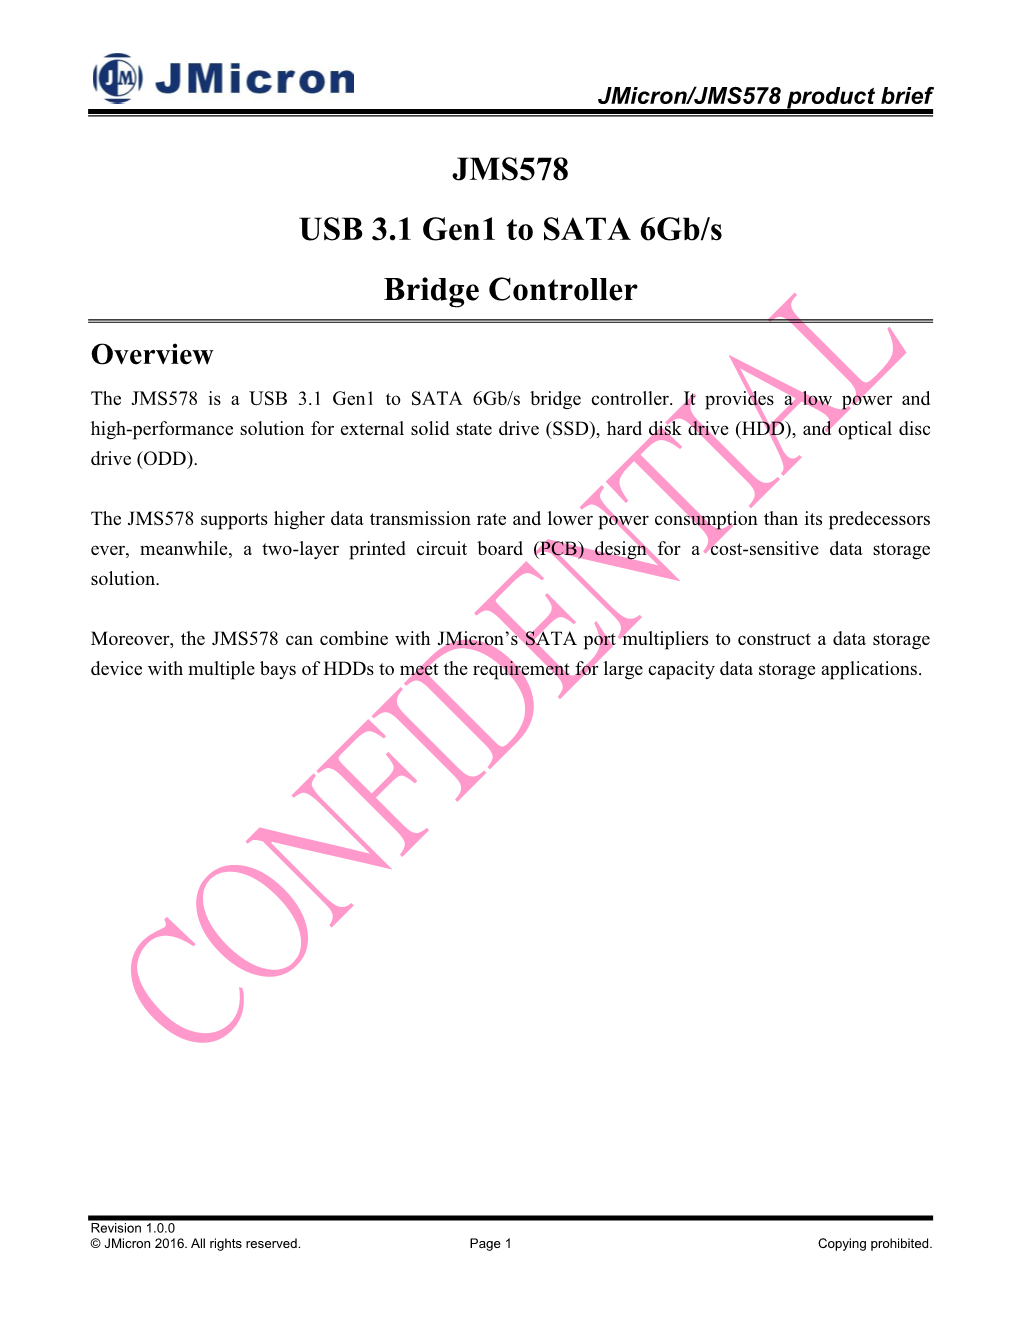 JMS578 USB 3.1 Gen1 to SATA 6Gb/S Bridge Controller